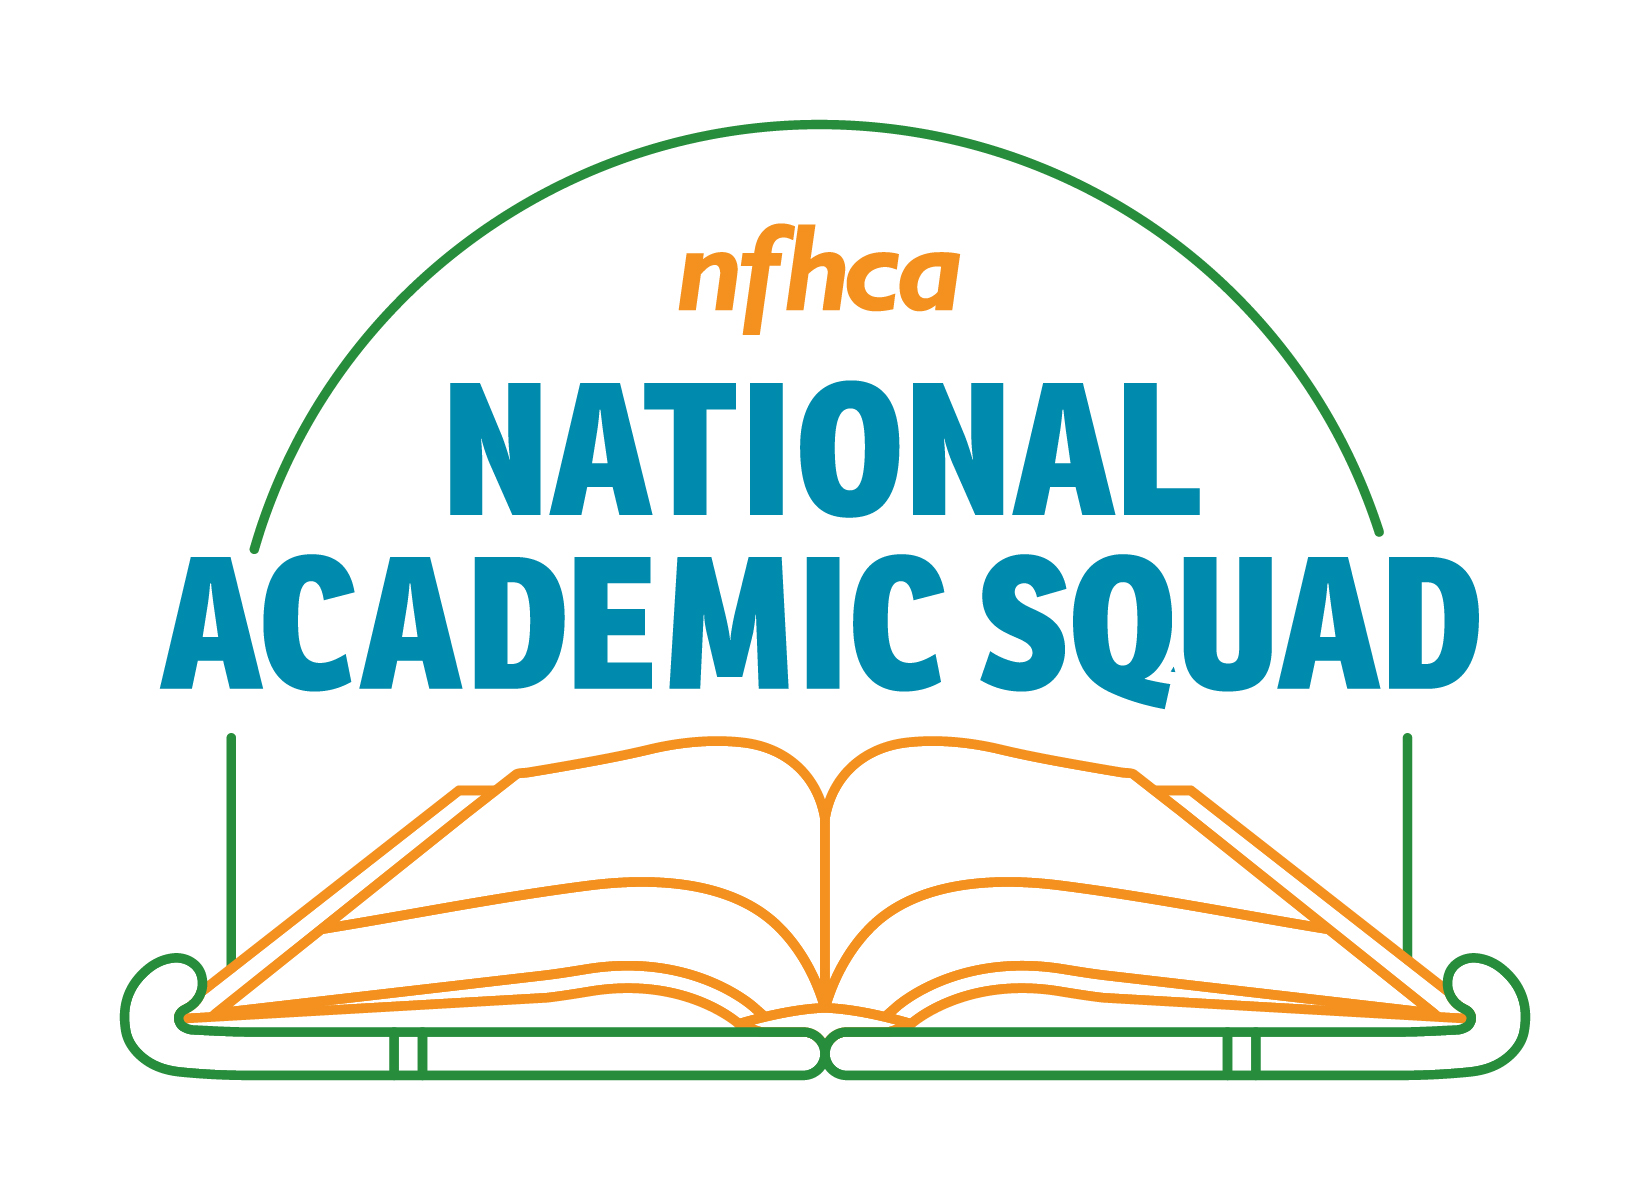 National Academic Squad graphic